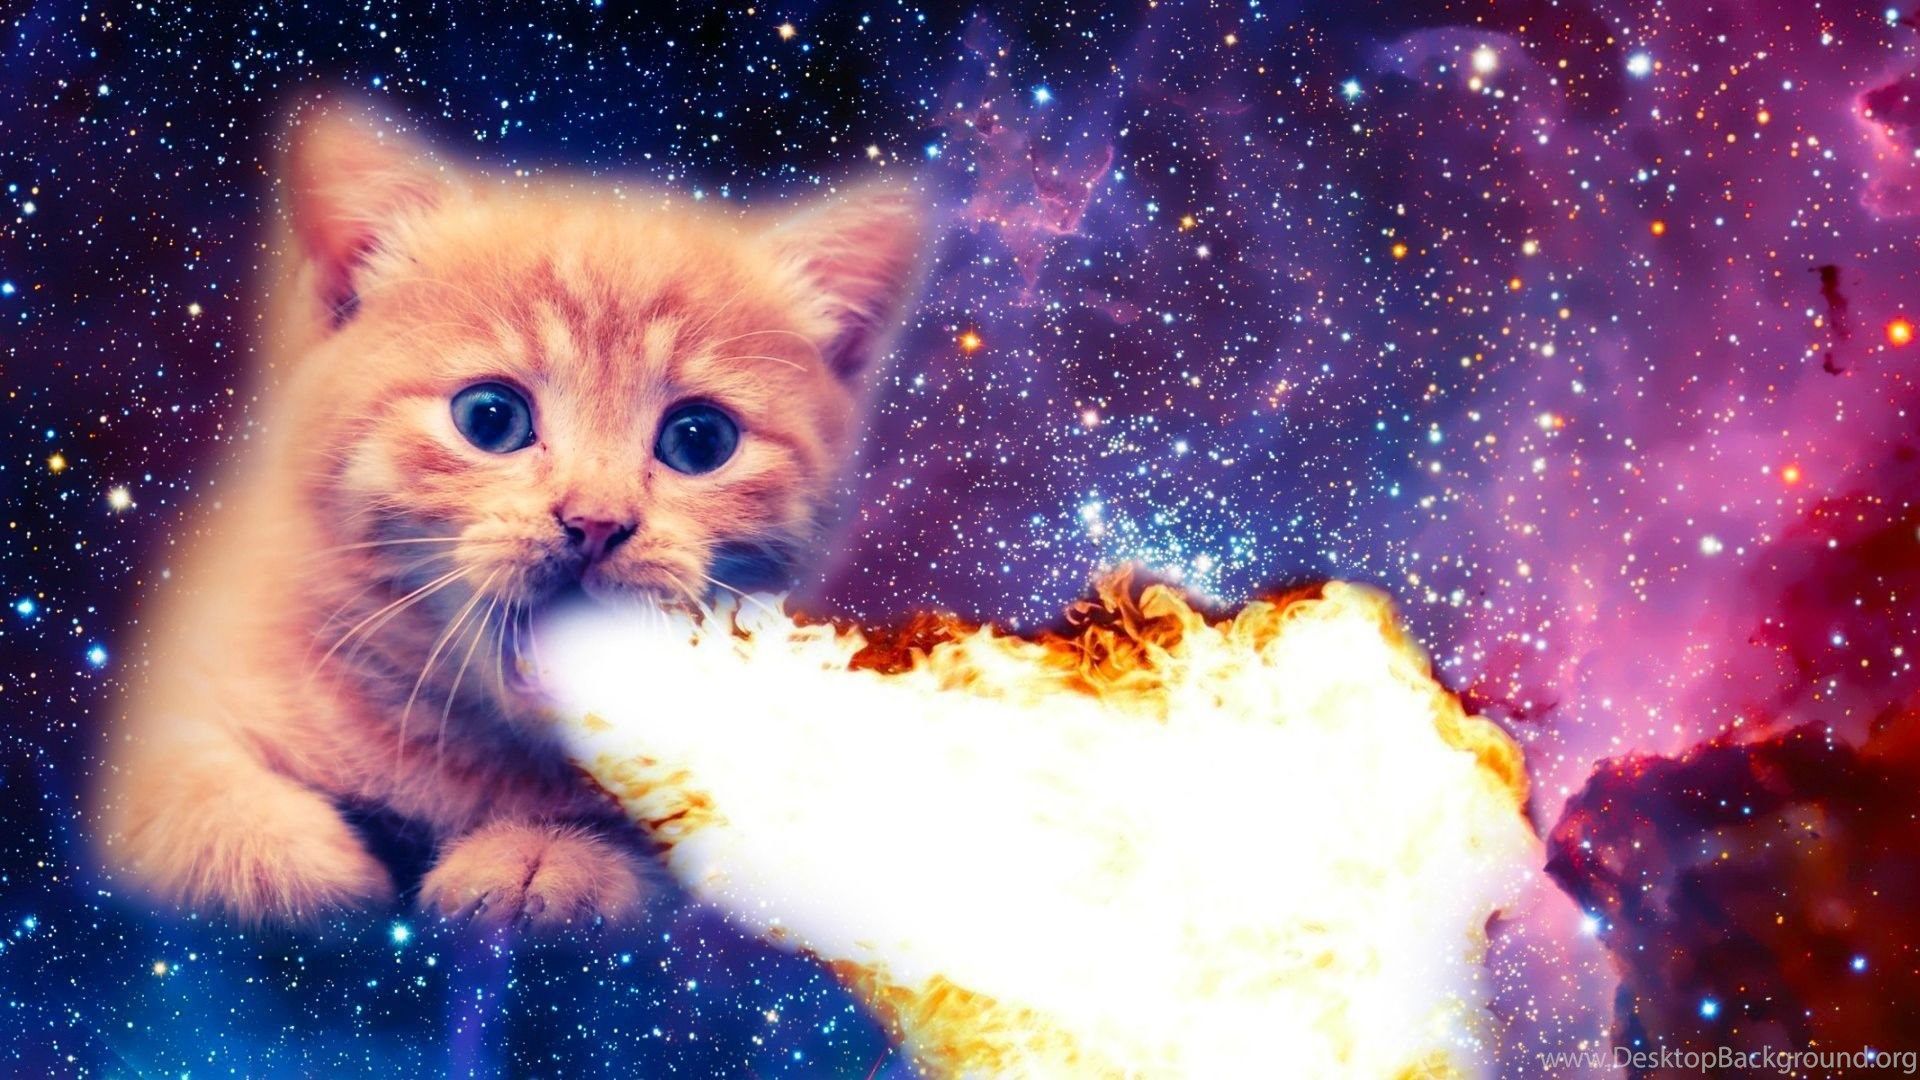 My Fire Breathing Space Cat Imgur Desktop Background